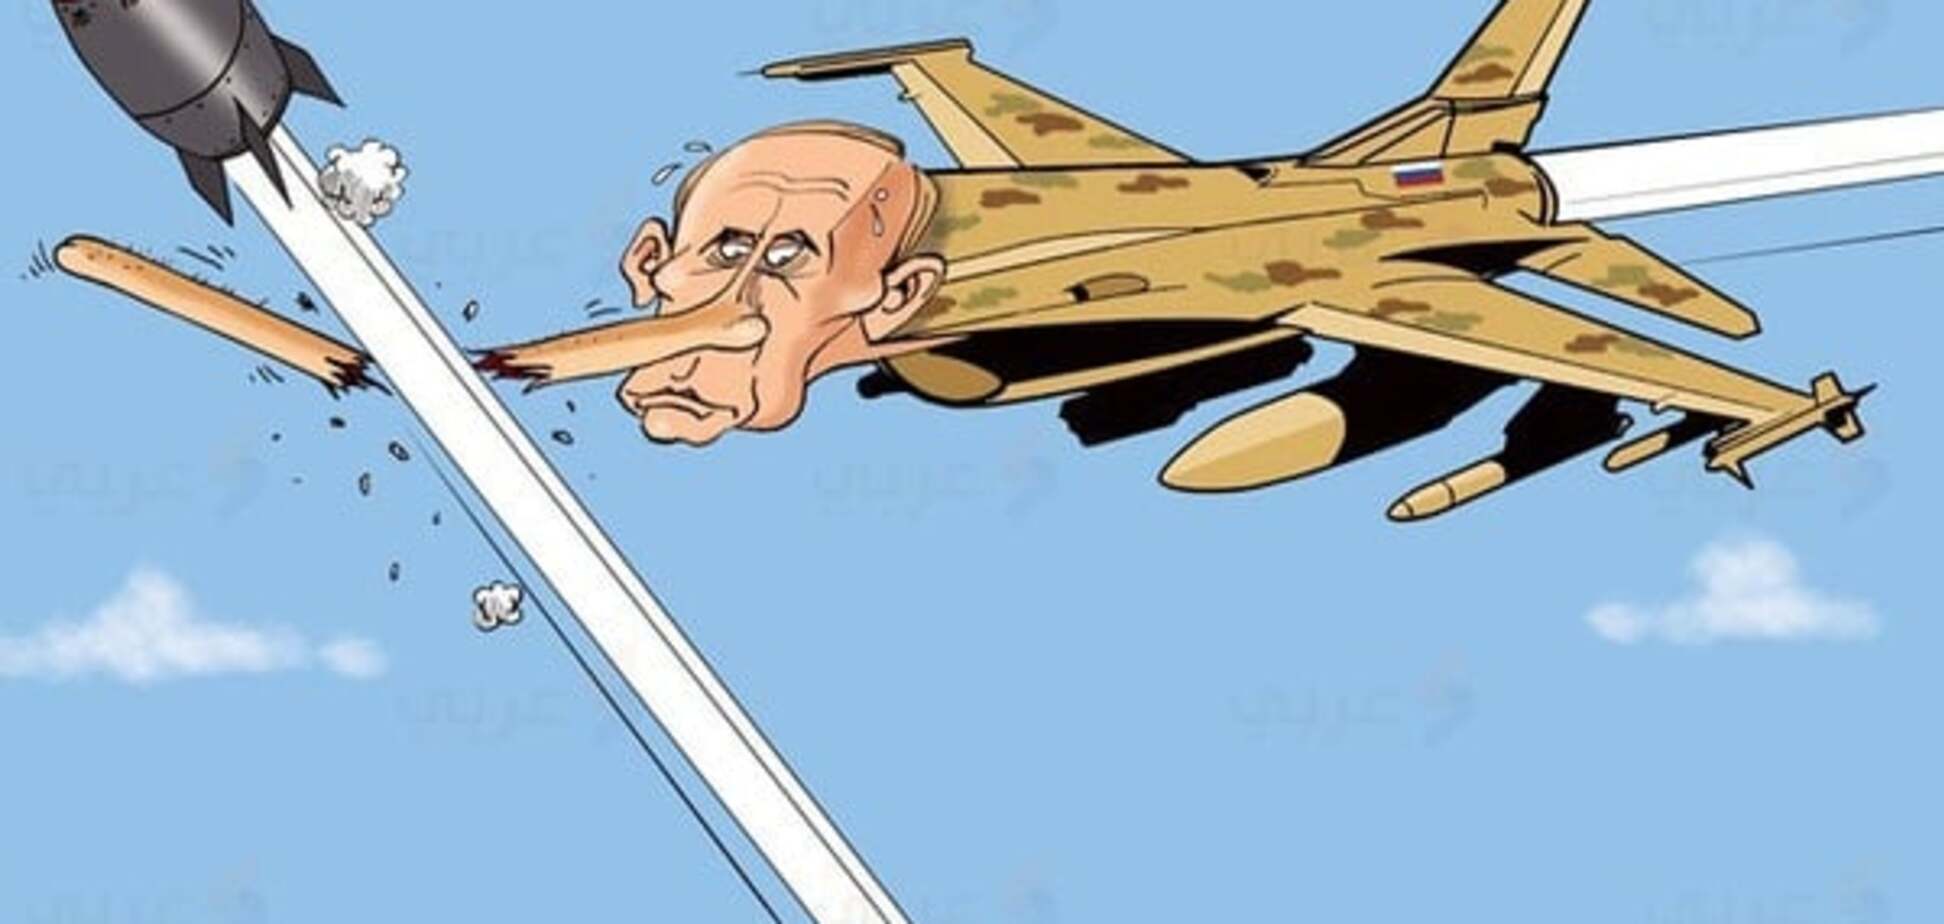 Не суй свой нос: интернет взорвала карикатура на сбитый турками Су-24